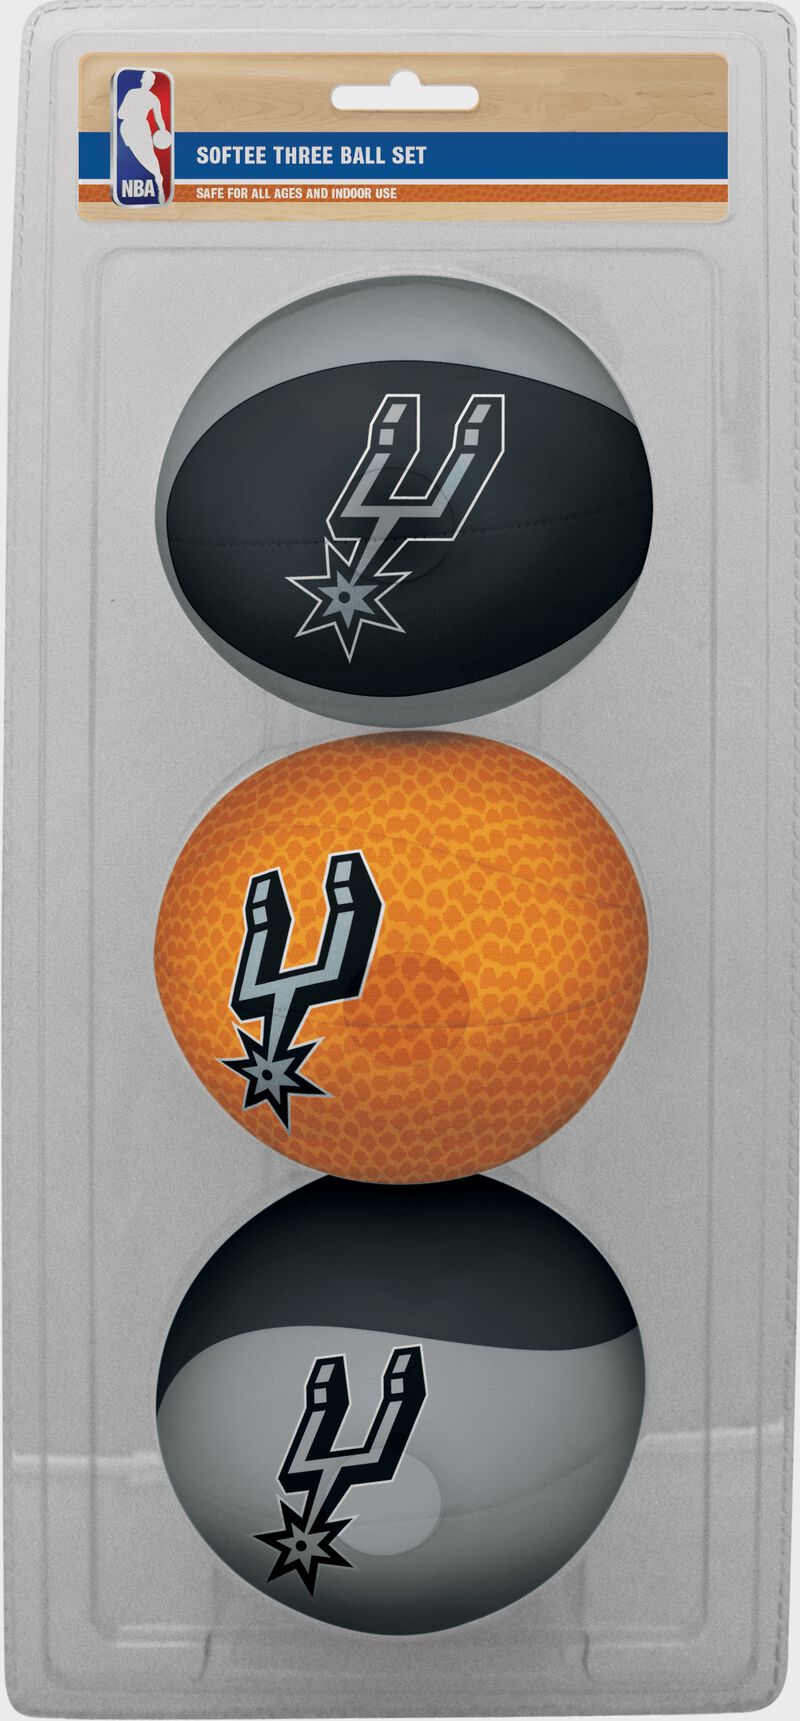 Rawlings Black, Brown, and Grey NBA San Antonio Spurs Three-Point Softee Basketball Set With Team Logo SKU #03524212114 loading=